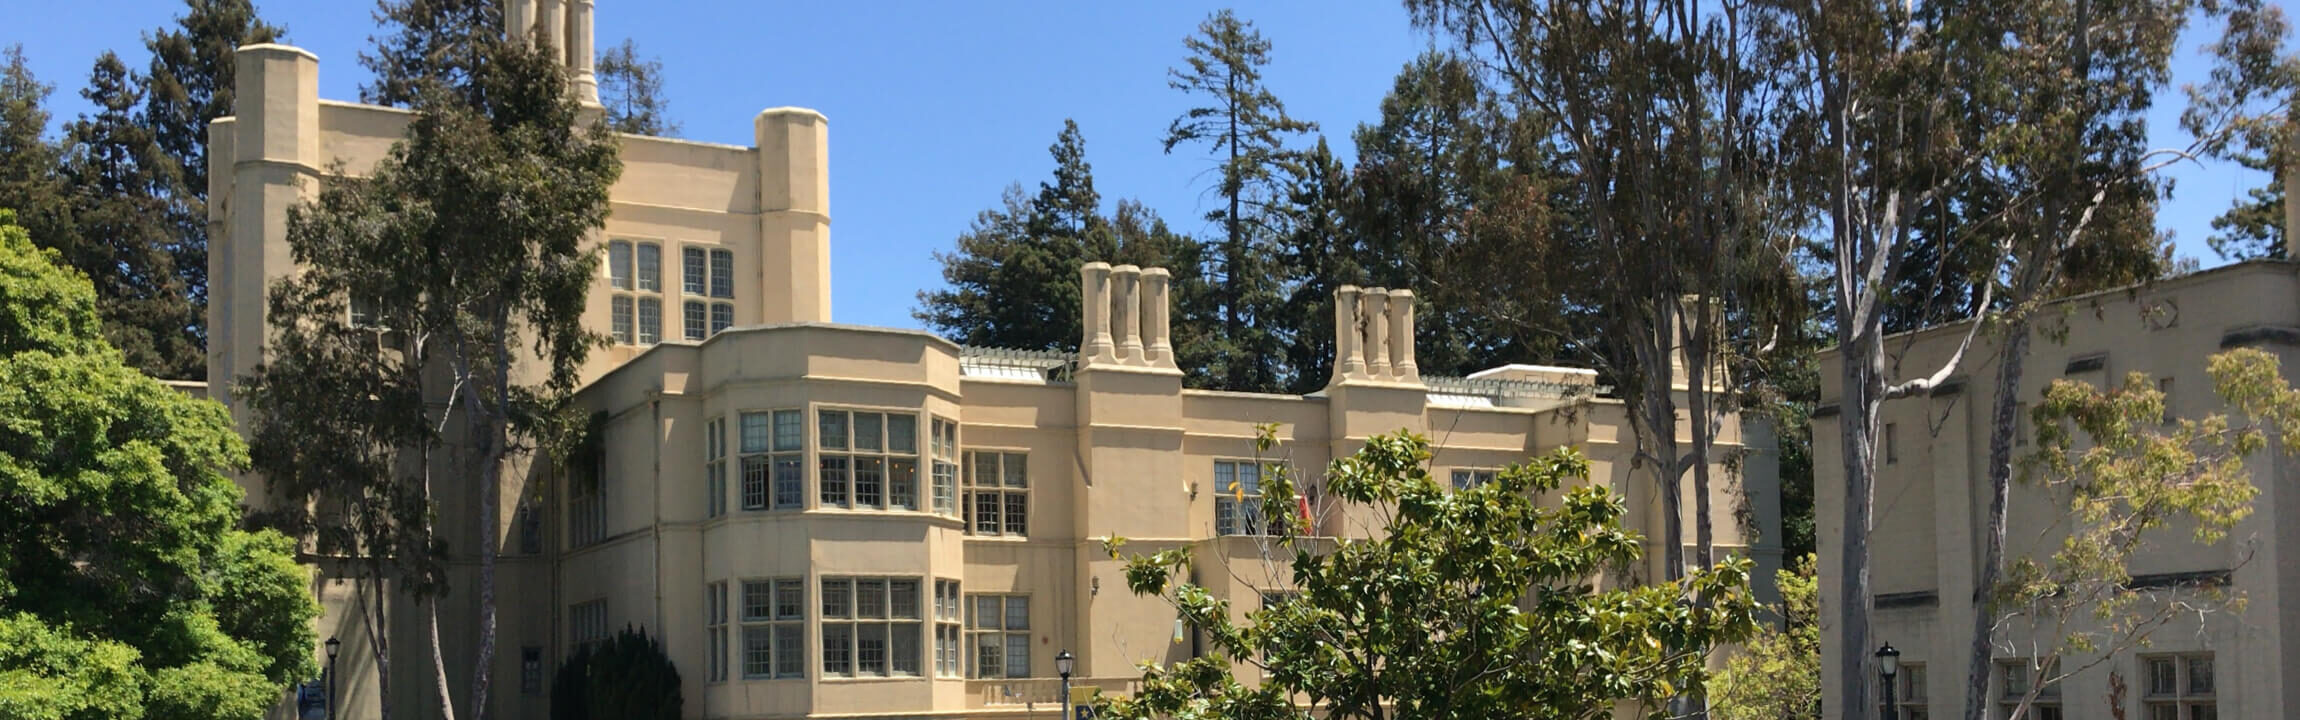 Photo of Stephens Hall at UC Berkeley